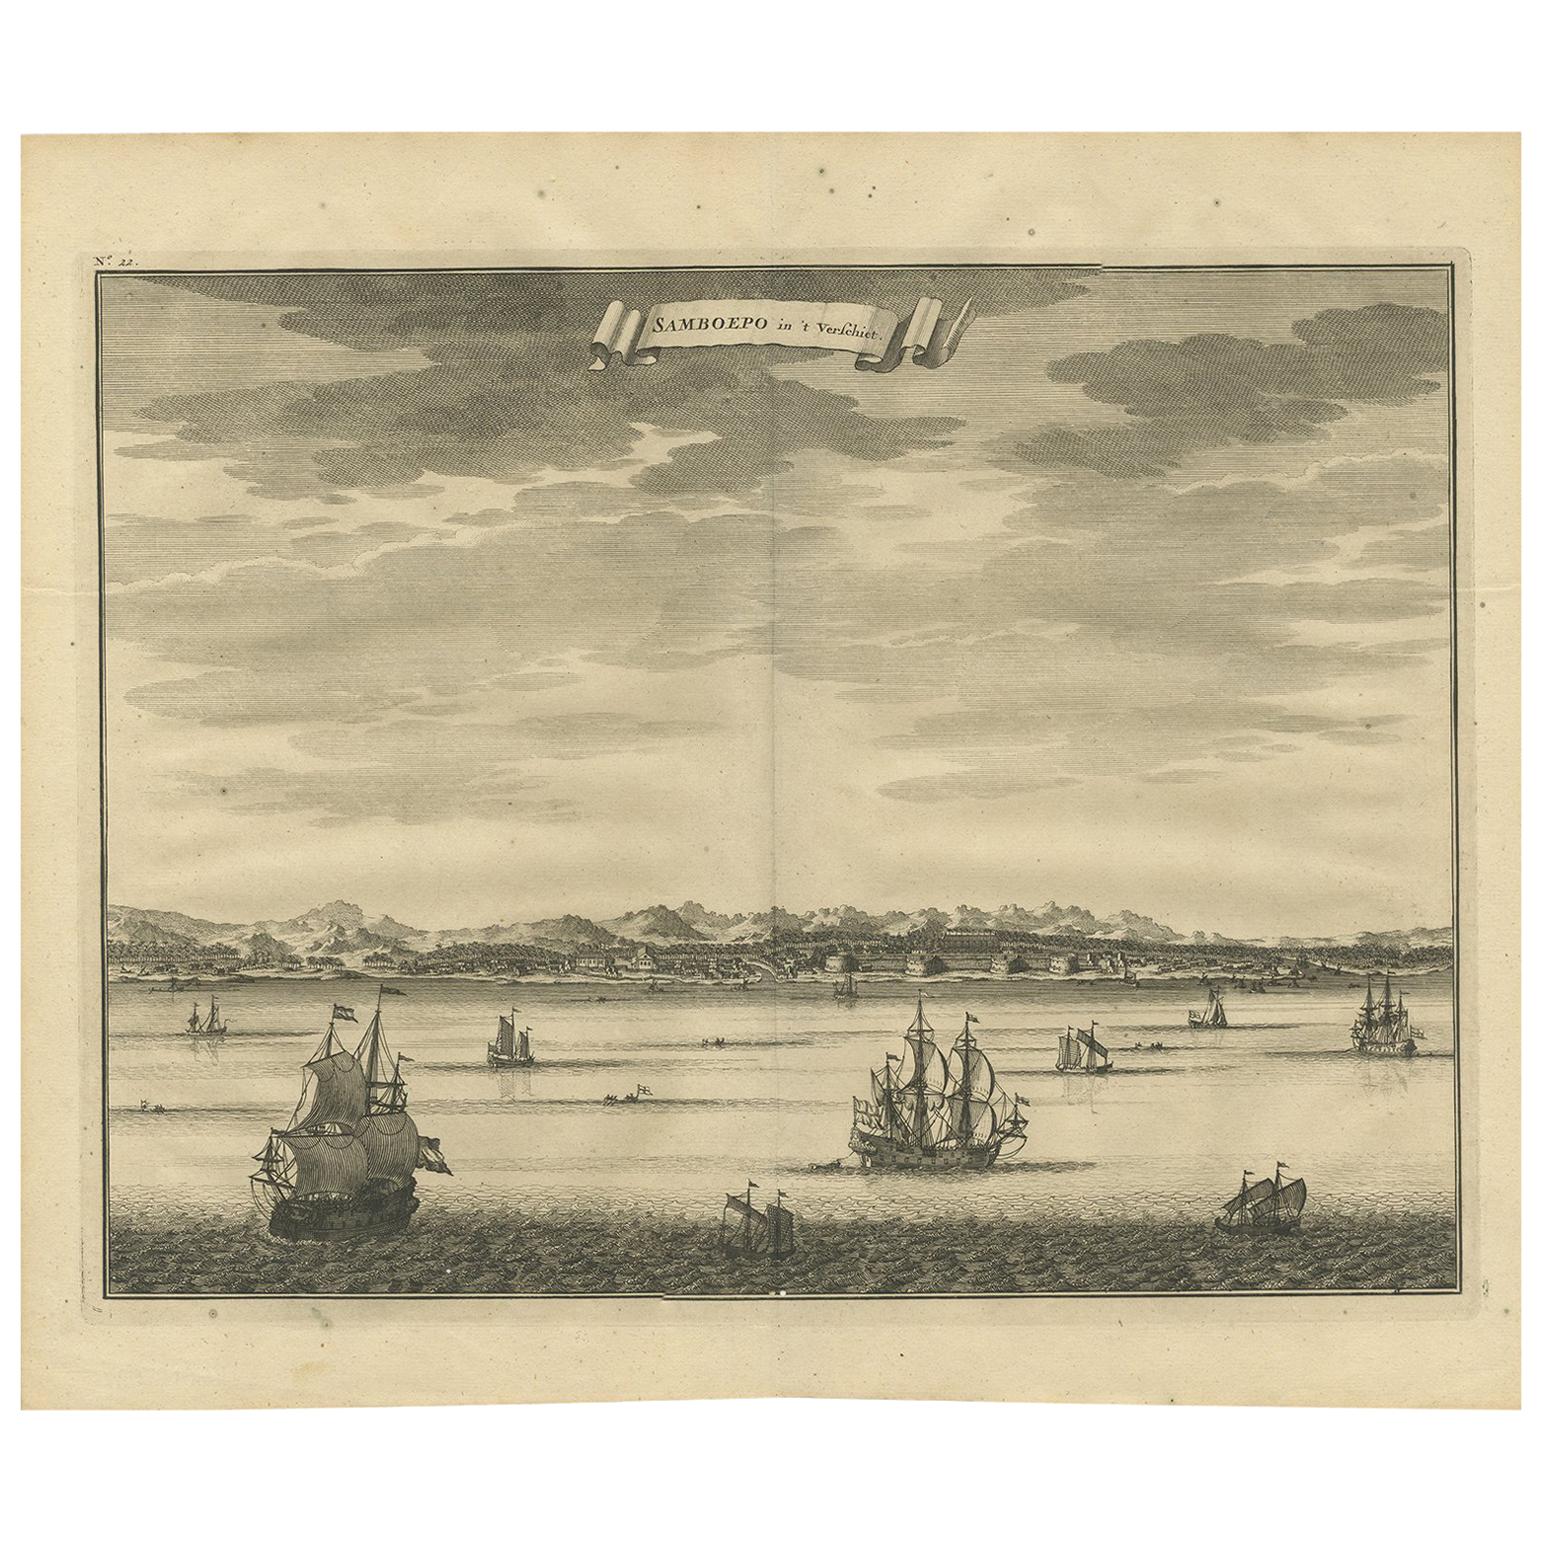 Impression ancienne de Samboepo par Valentijn, 1726